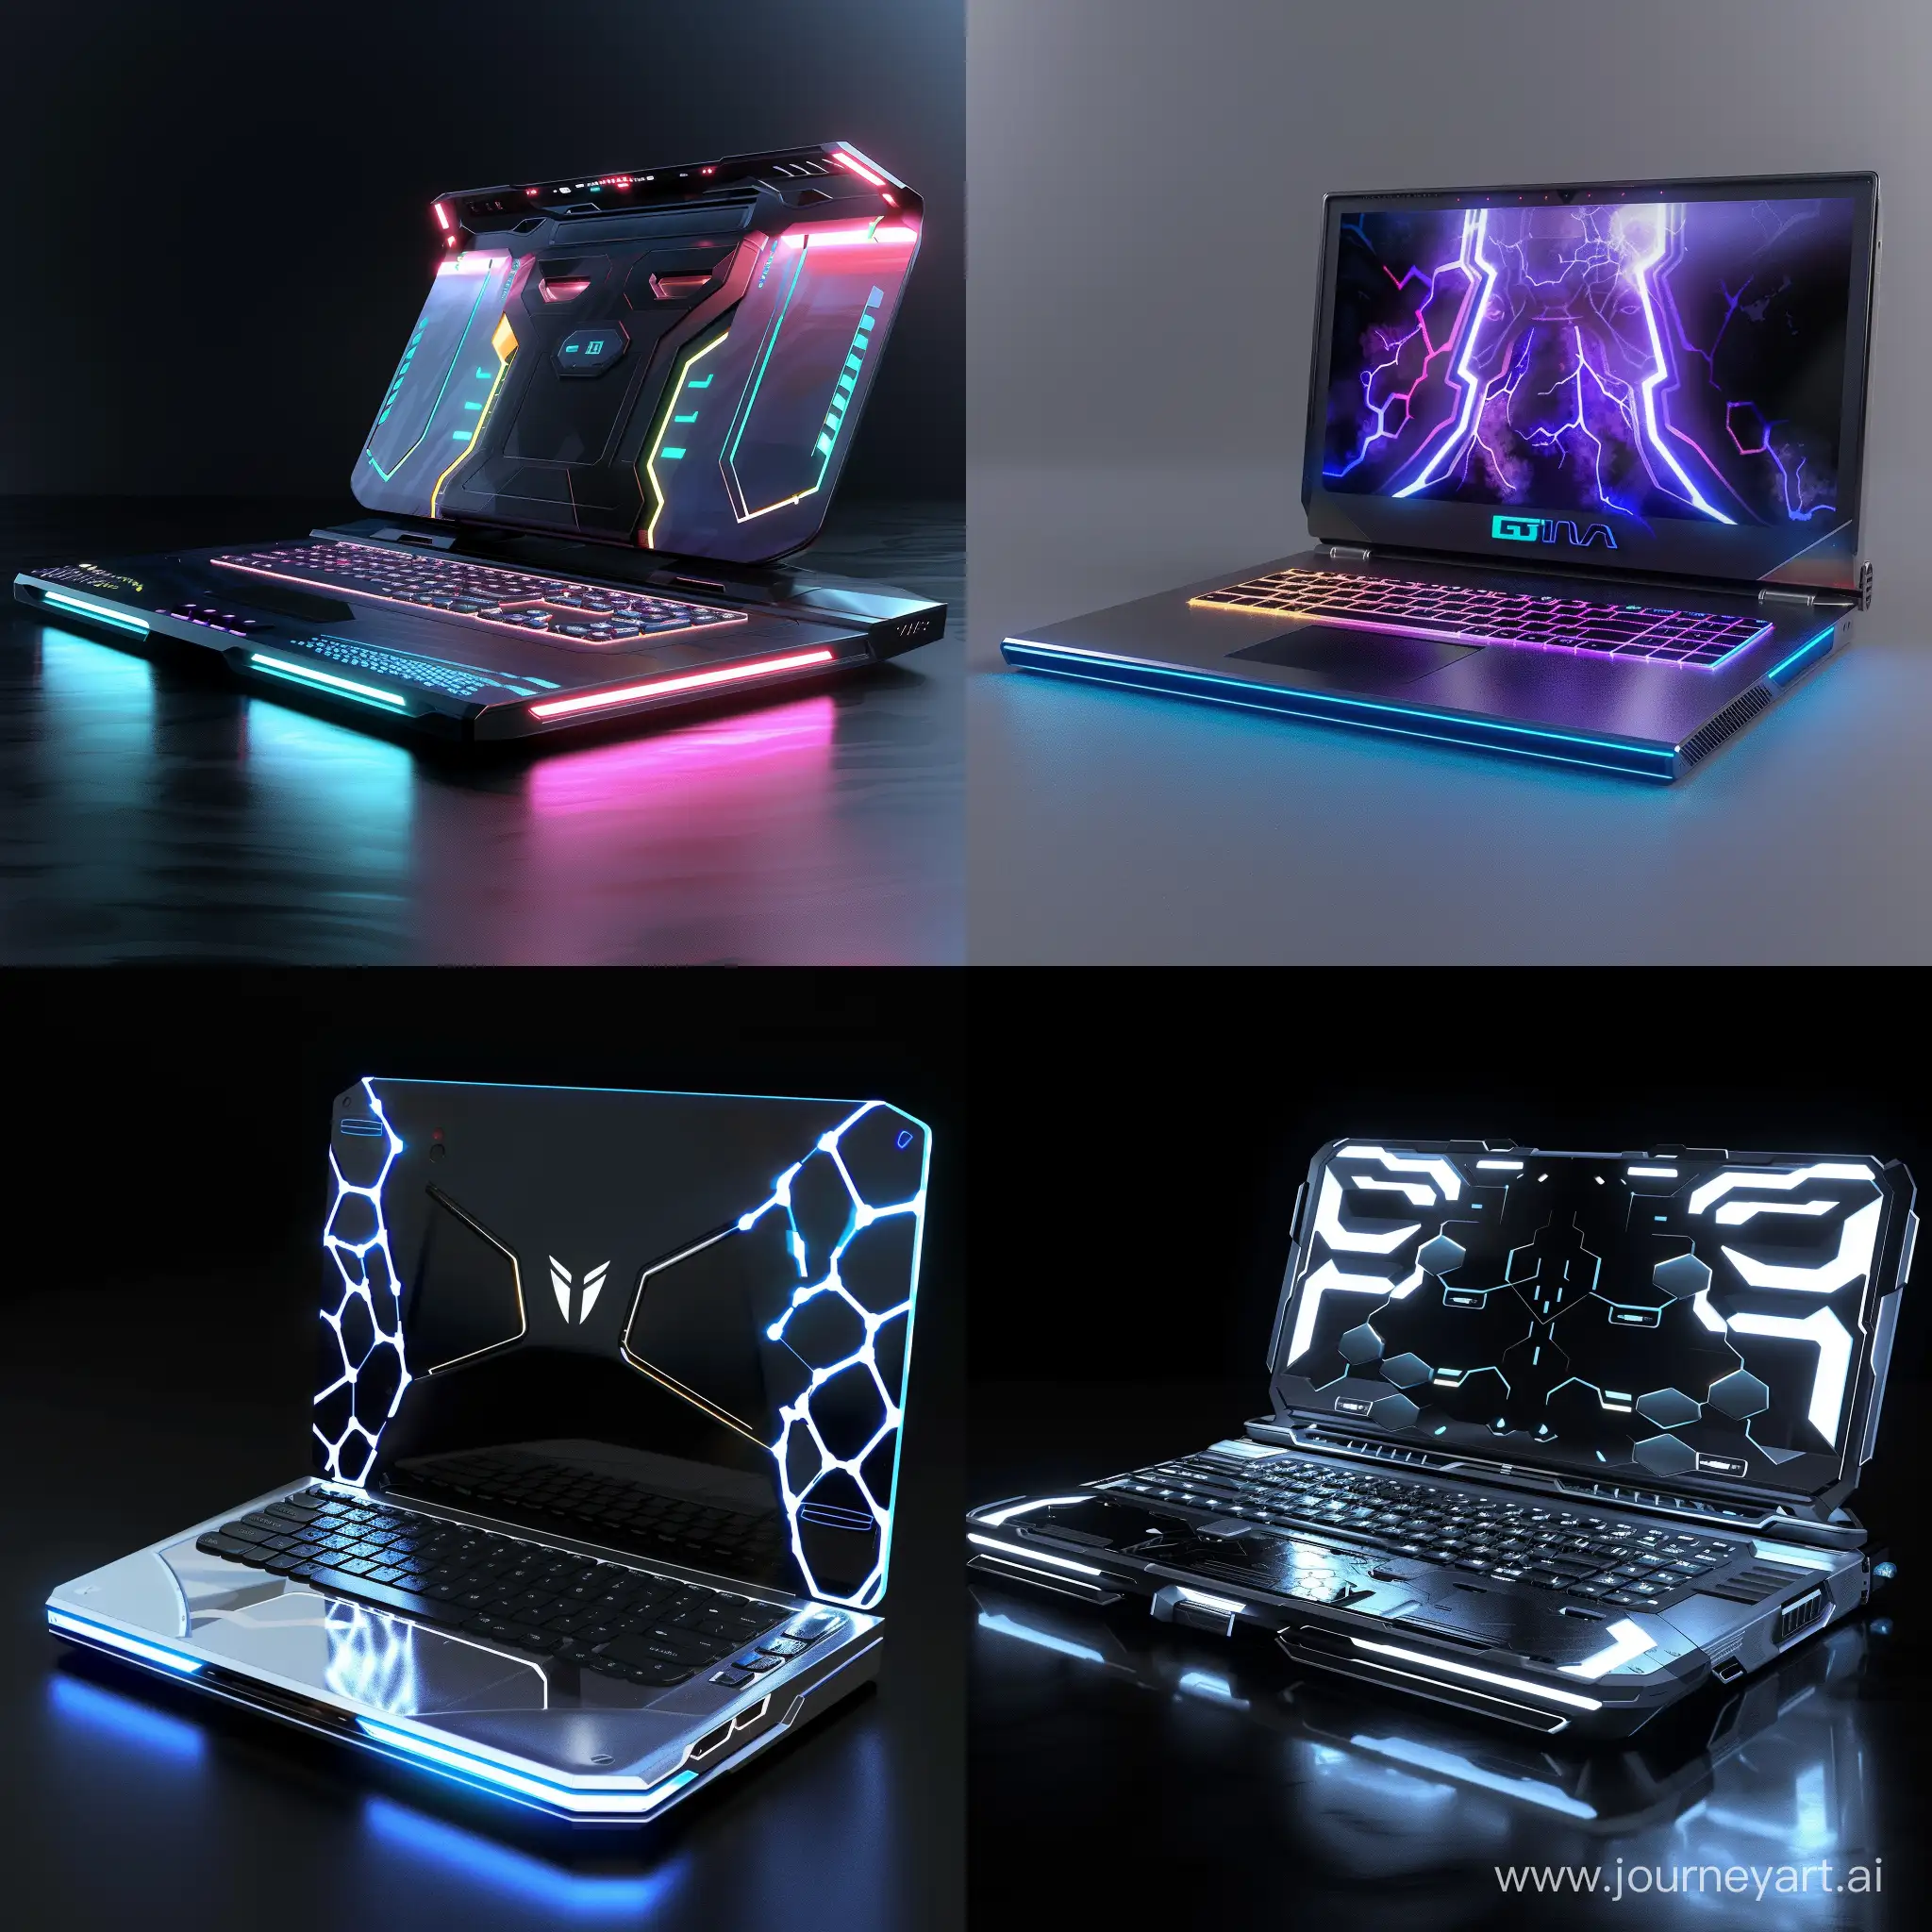 Futuristic-Laptop-with-Durable-HighTech-Design